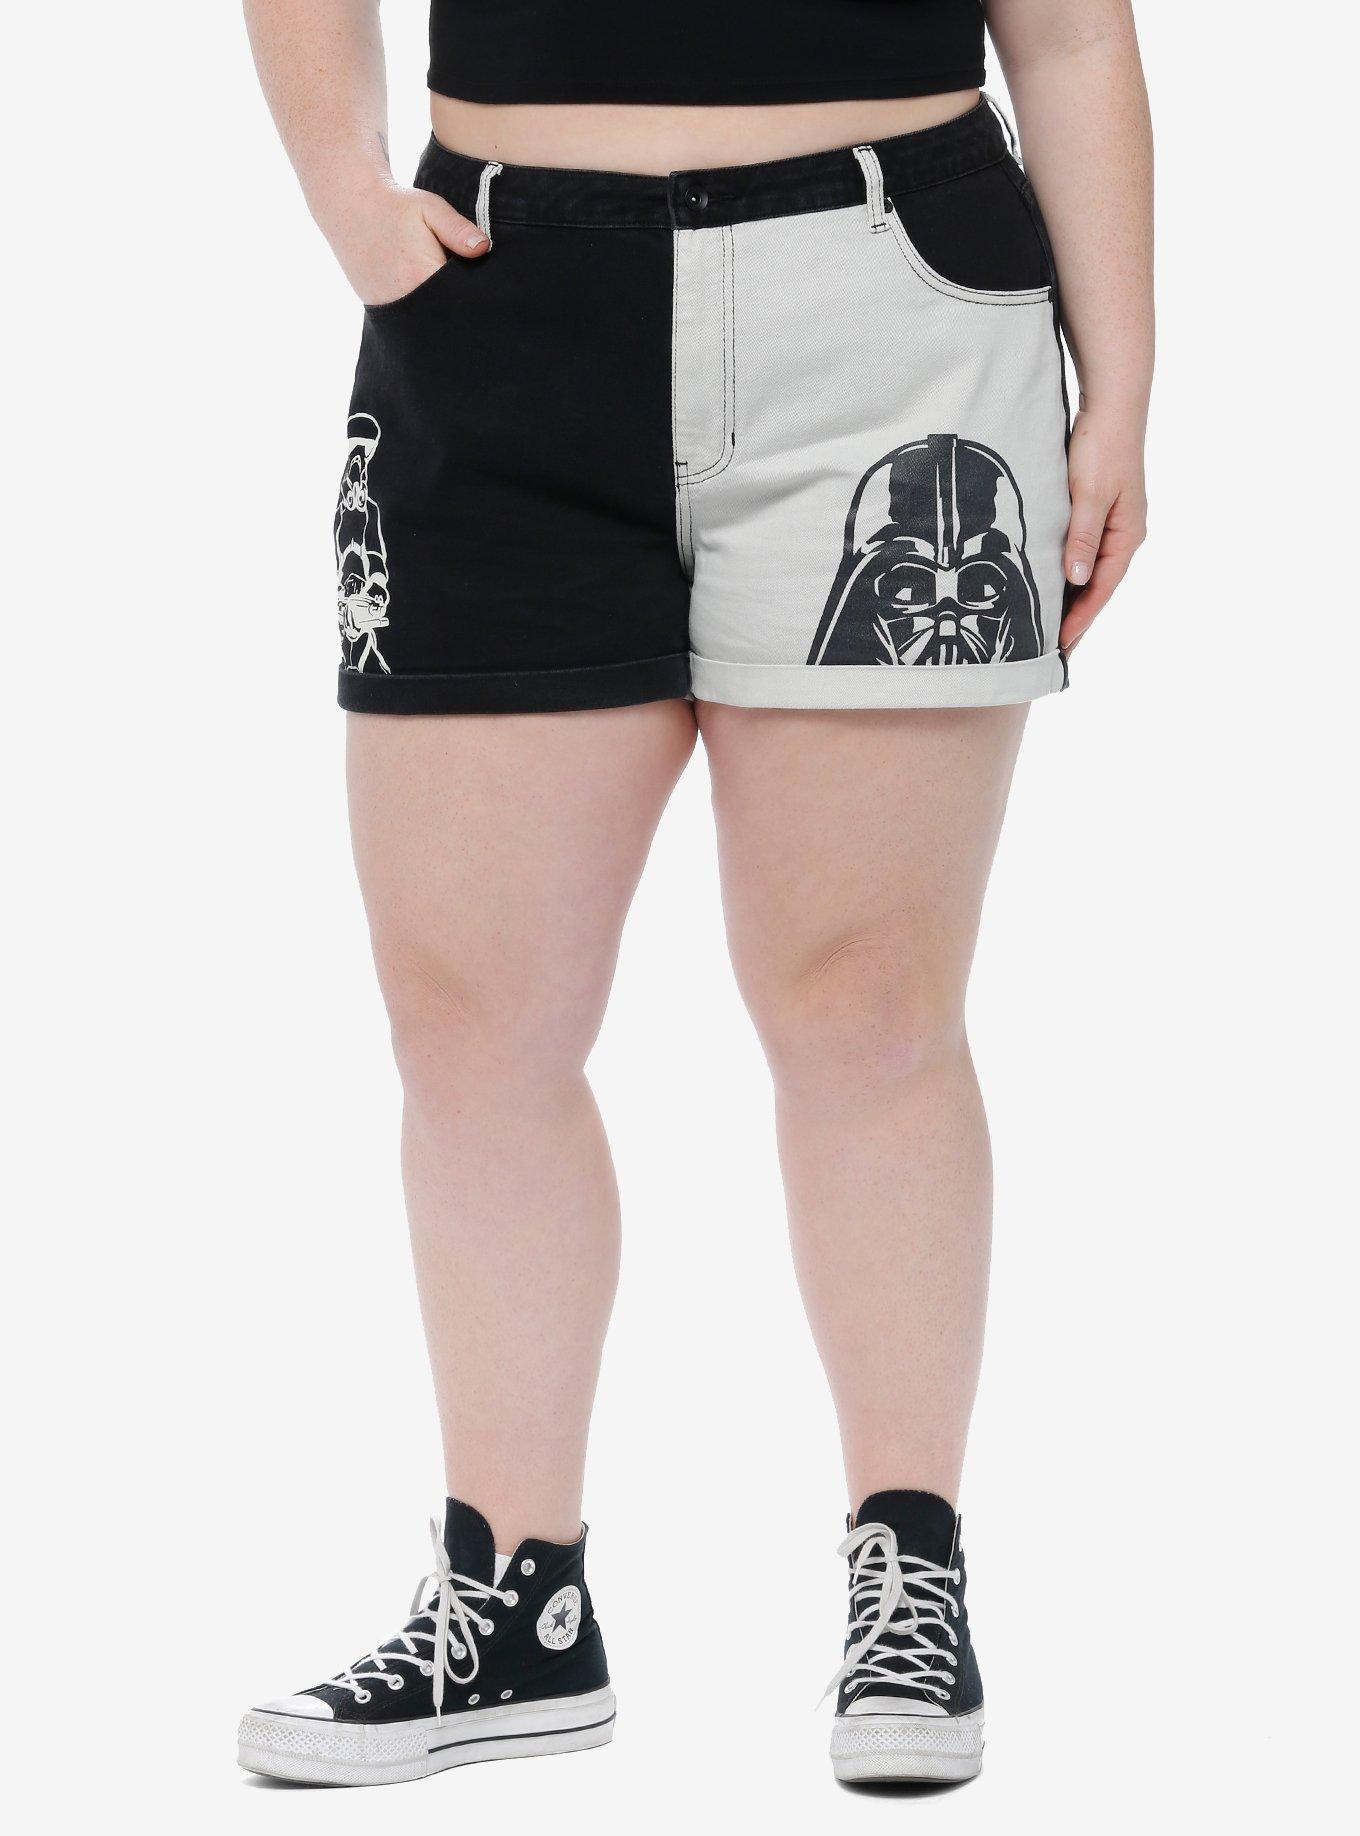 Her Universe Star Wars Vader Stormtrooper Split Mom Shorts Plus Size Her Universe Exclusive, BLACK  WHITE, hi-res